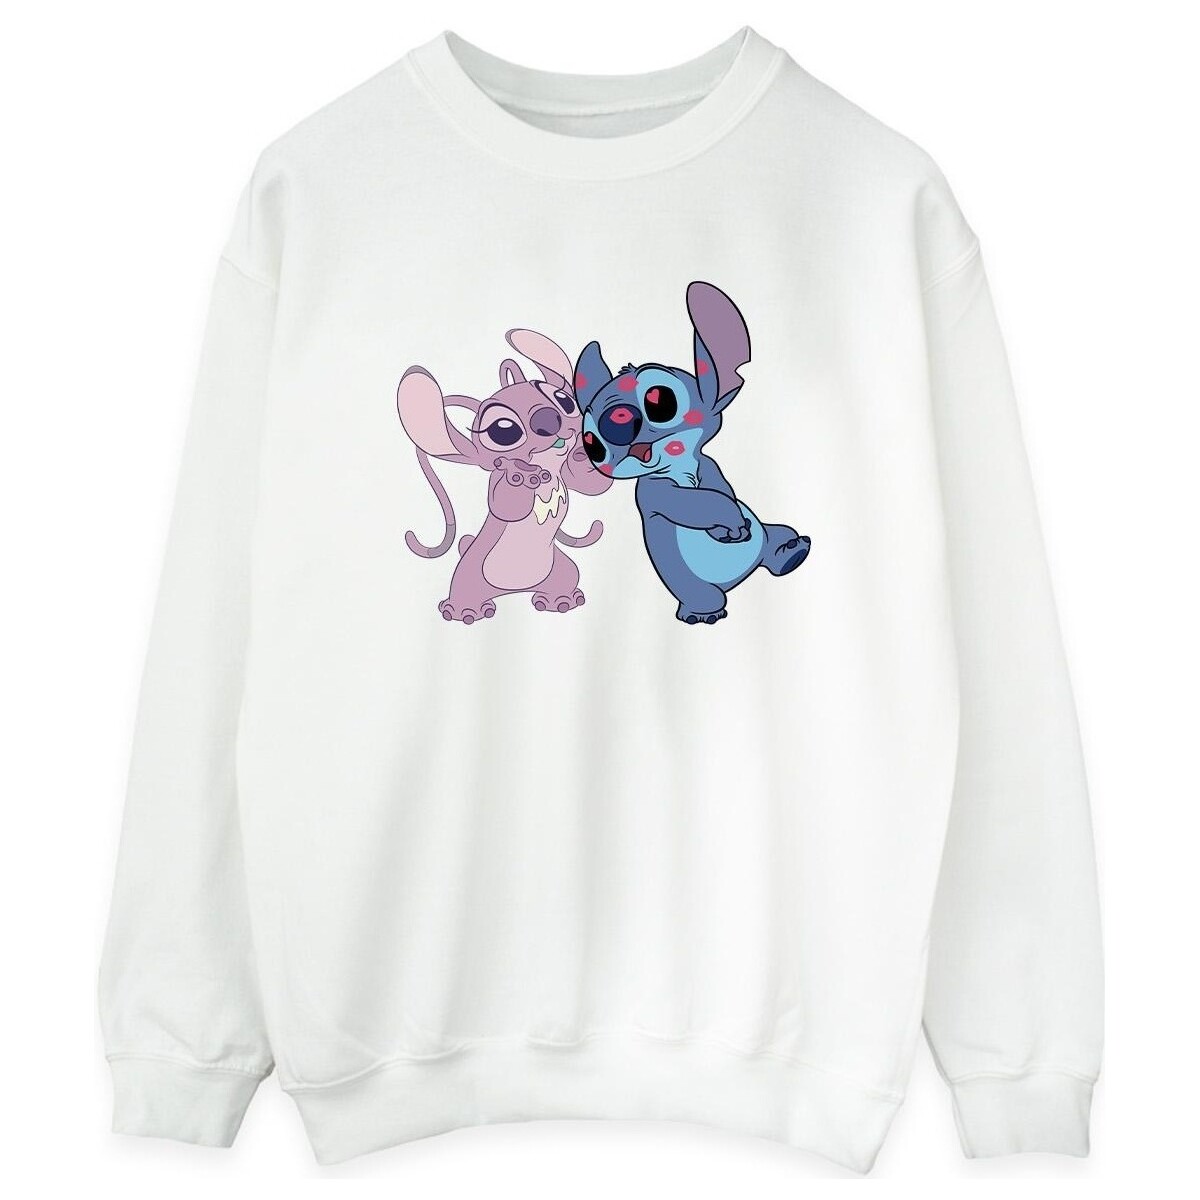 Vêtements Femme Sweats Disney Lilo & Stitch Kisses Blanc